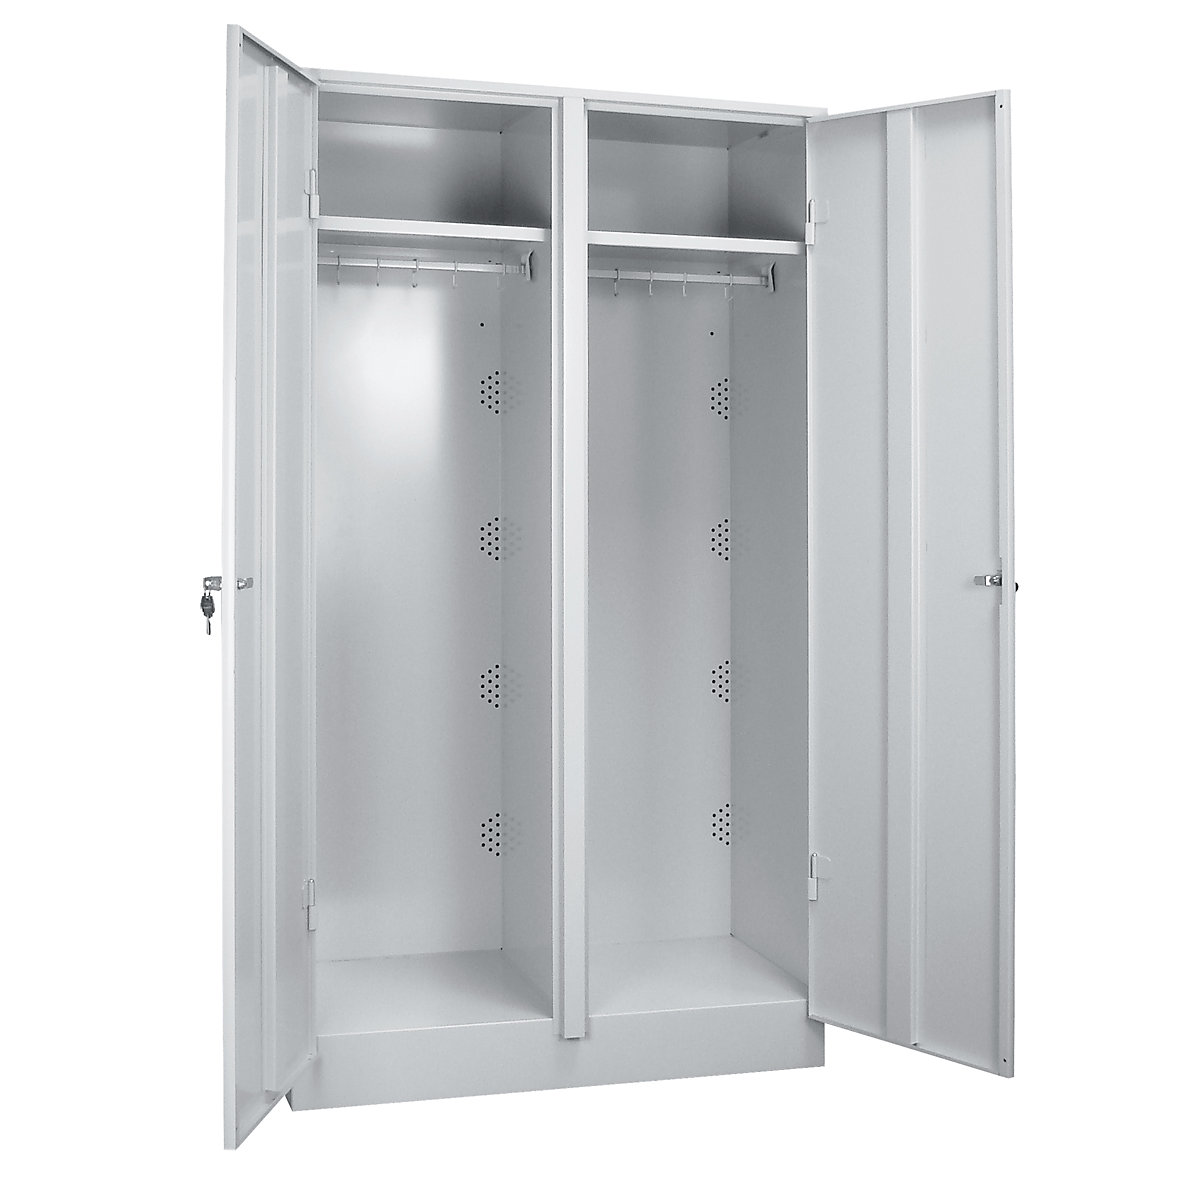 Steel cupboard – Wolf, cloakroom cupboard, 1000 mm wide, doors light grey RAL 7035, body light grey RAL 7035-5